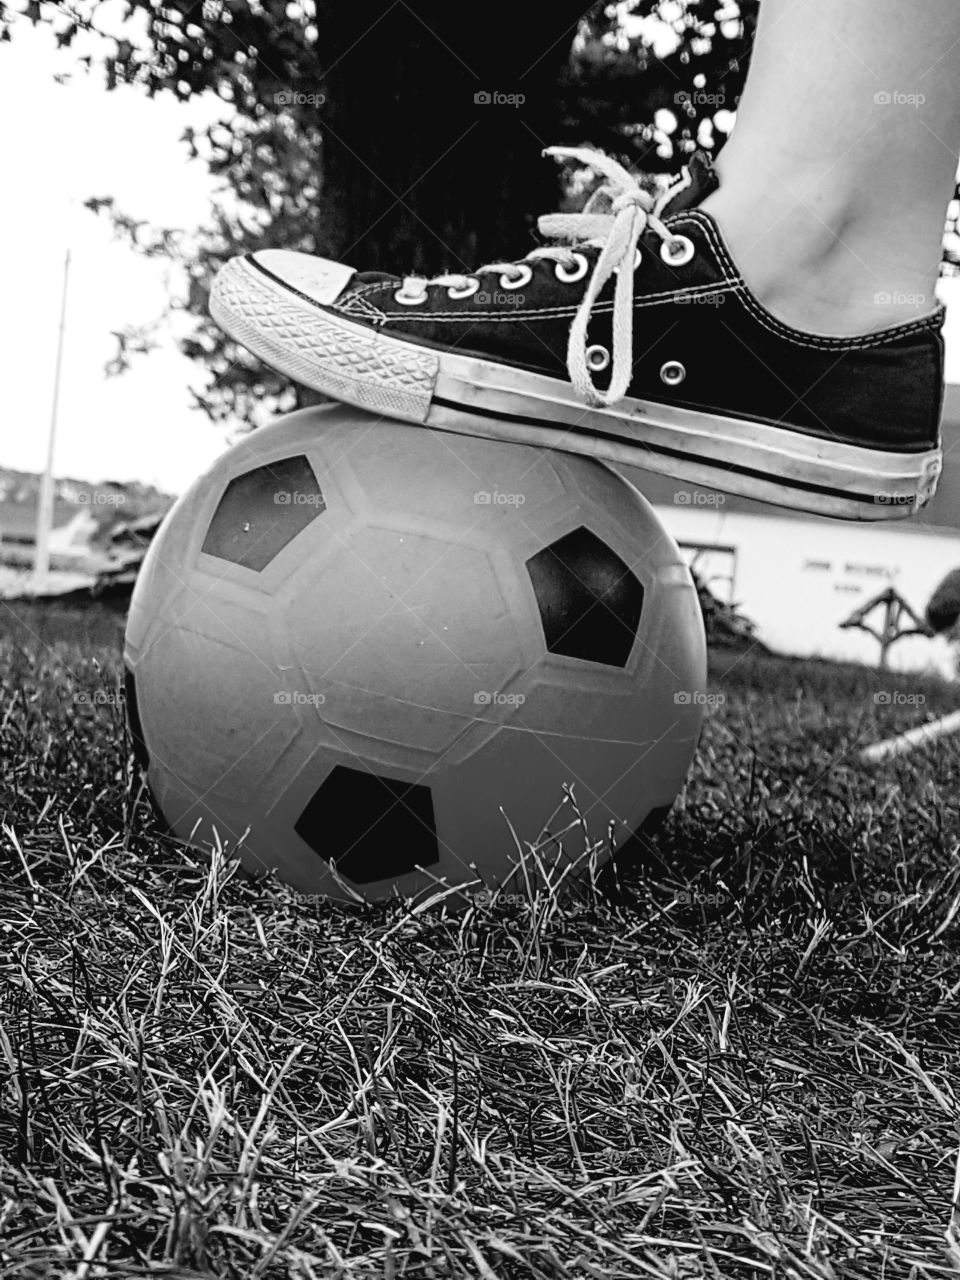 Soccer games on summer nights.💜